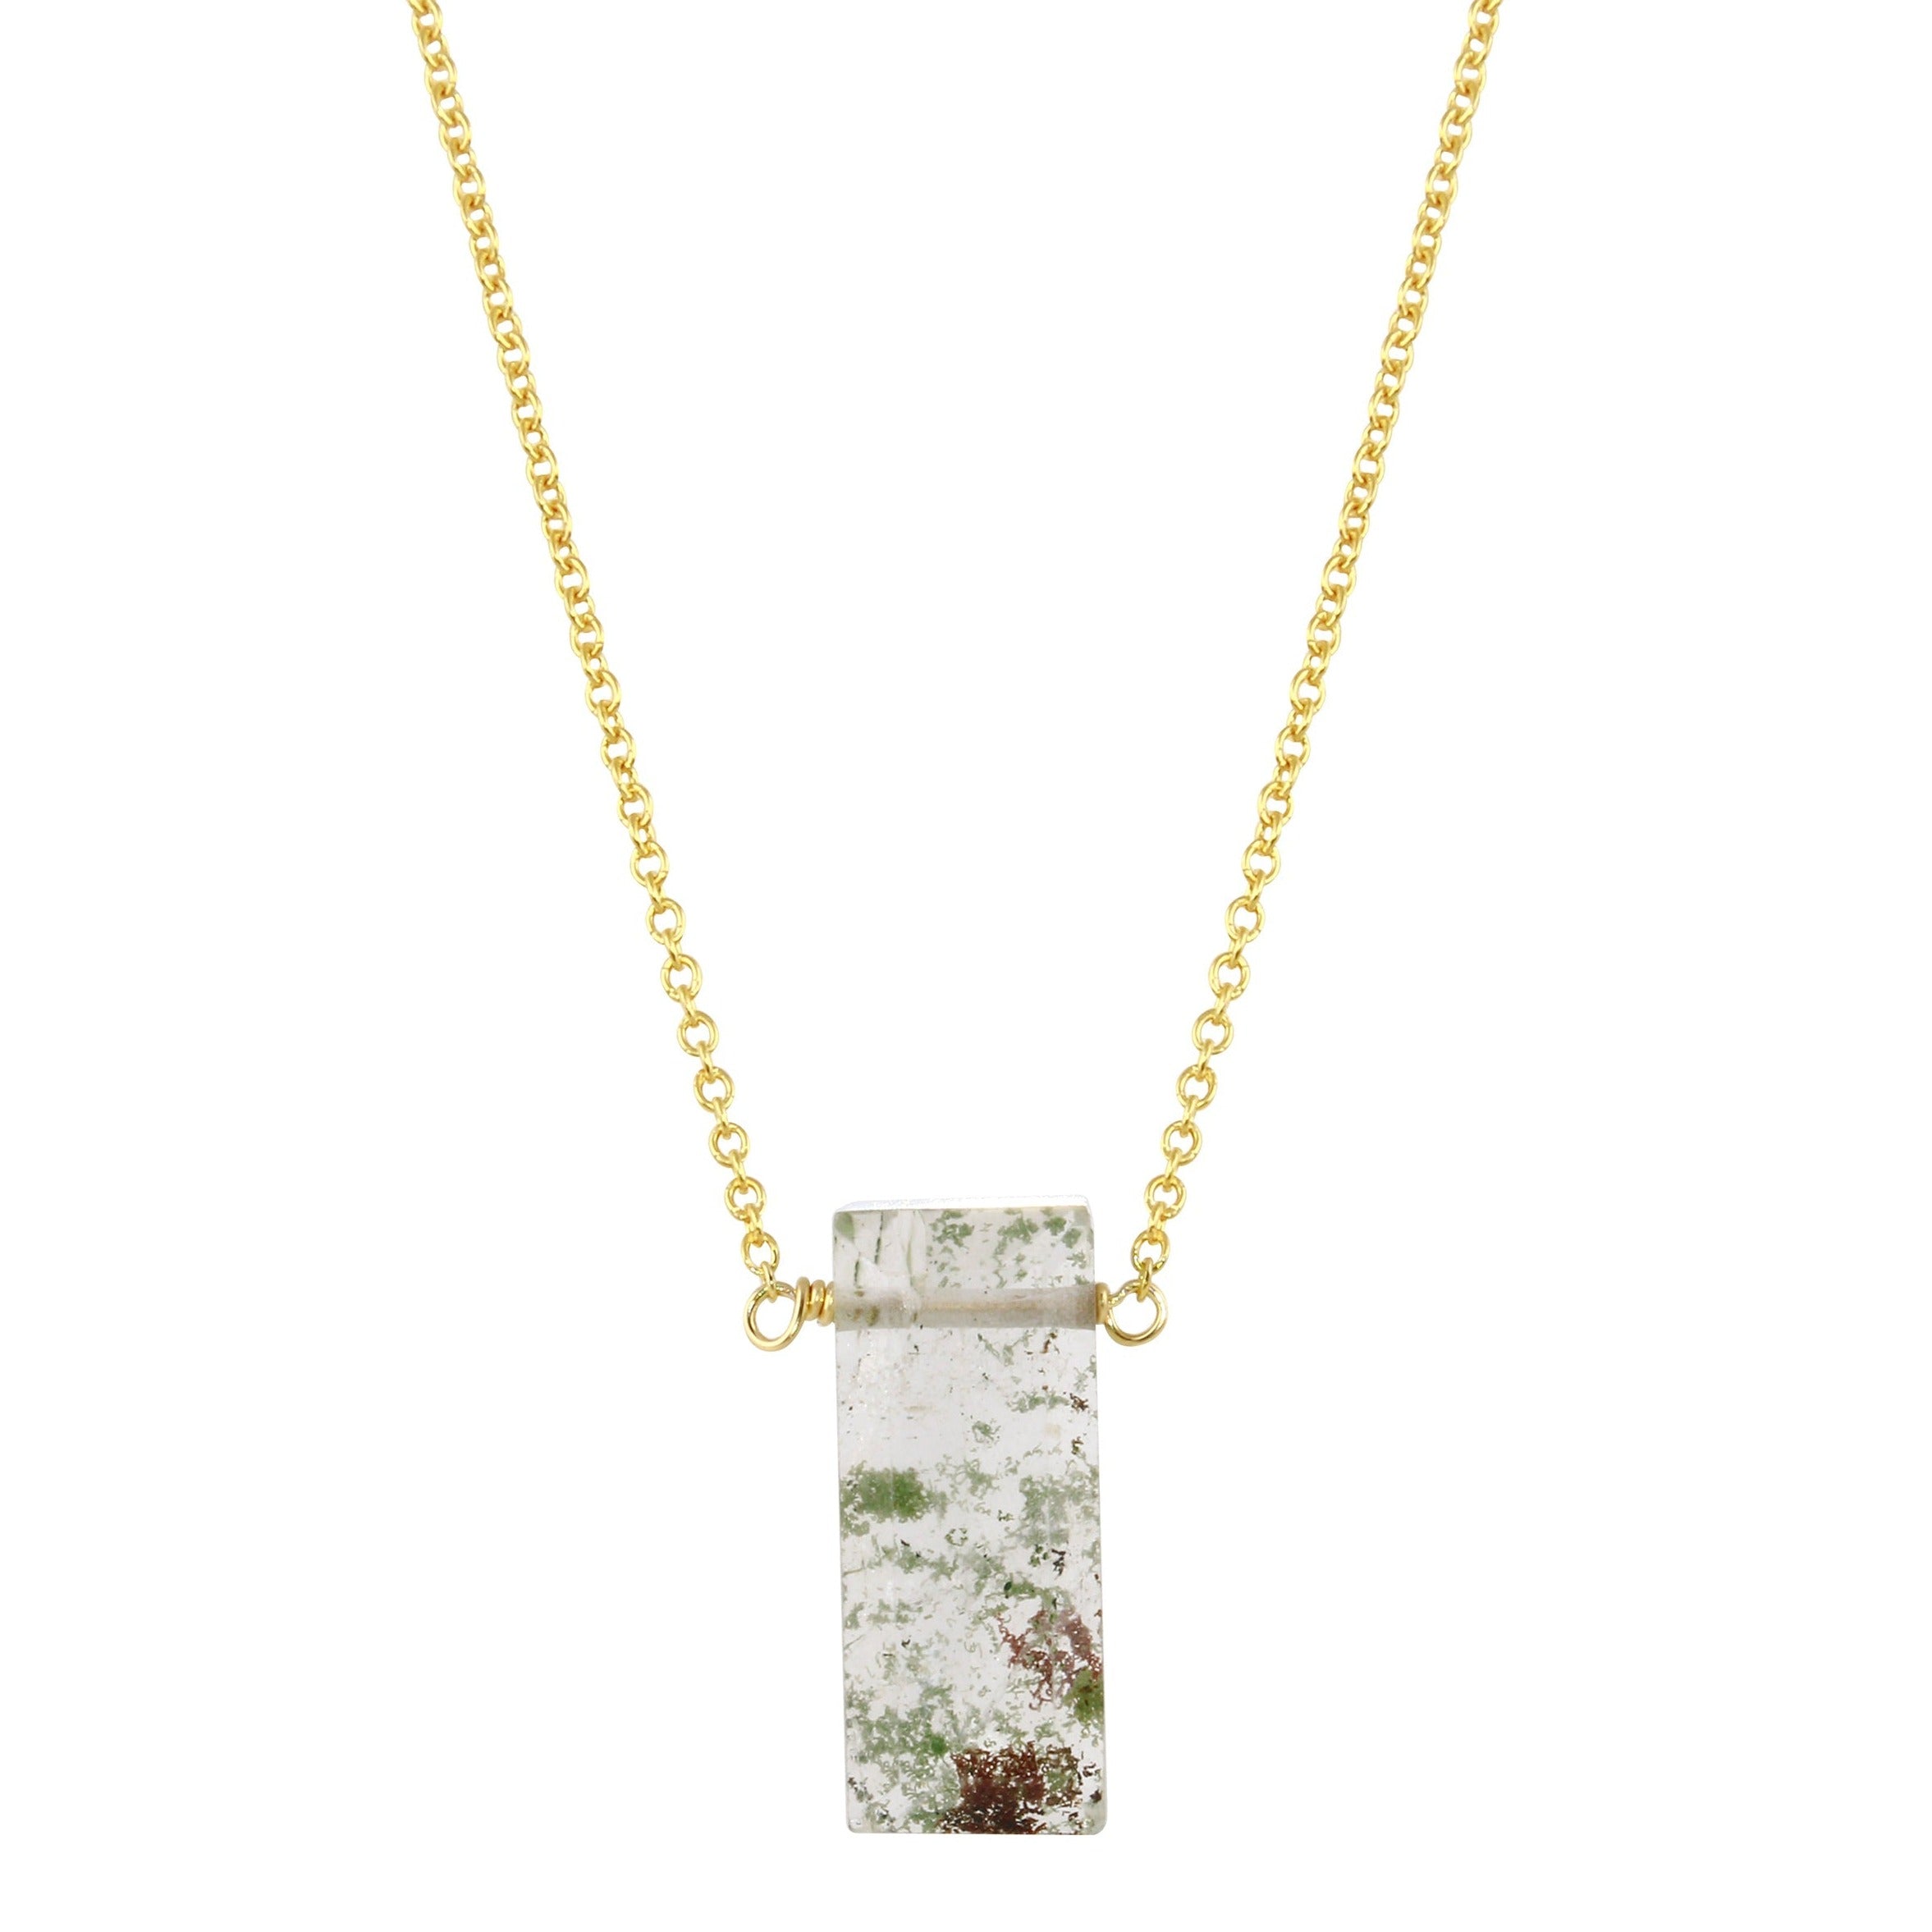 Garden Quartz necklace - sterling silver or gold filled | Little Rock Collection necklace Amanda K Lockrow